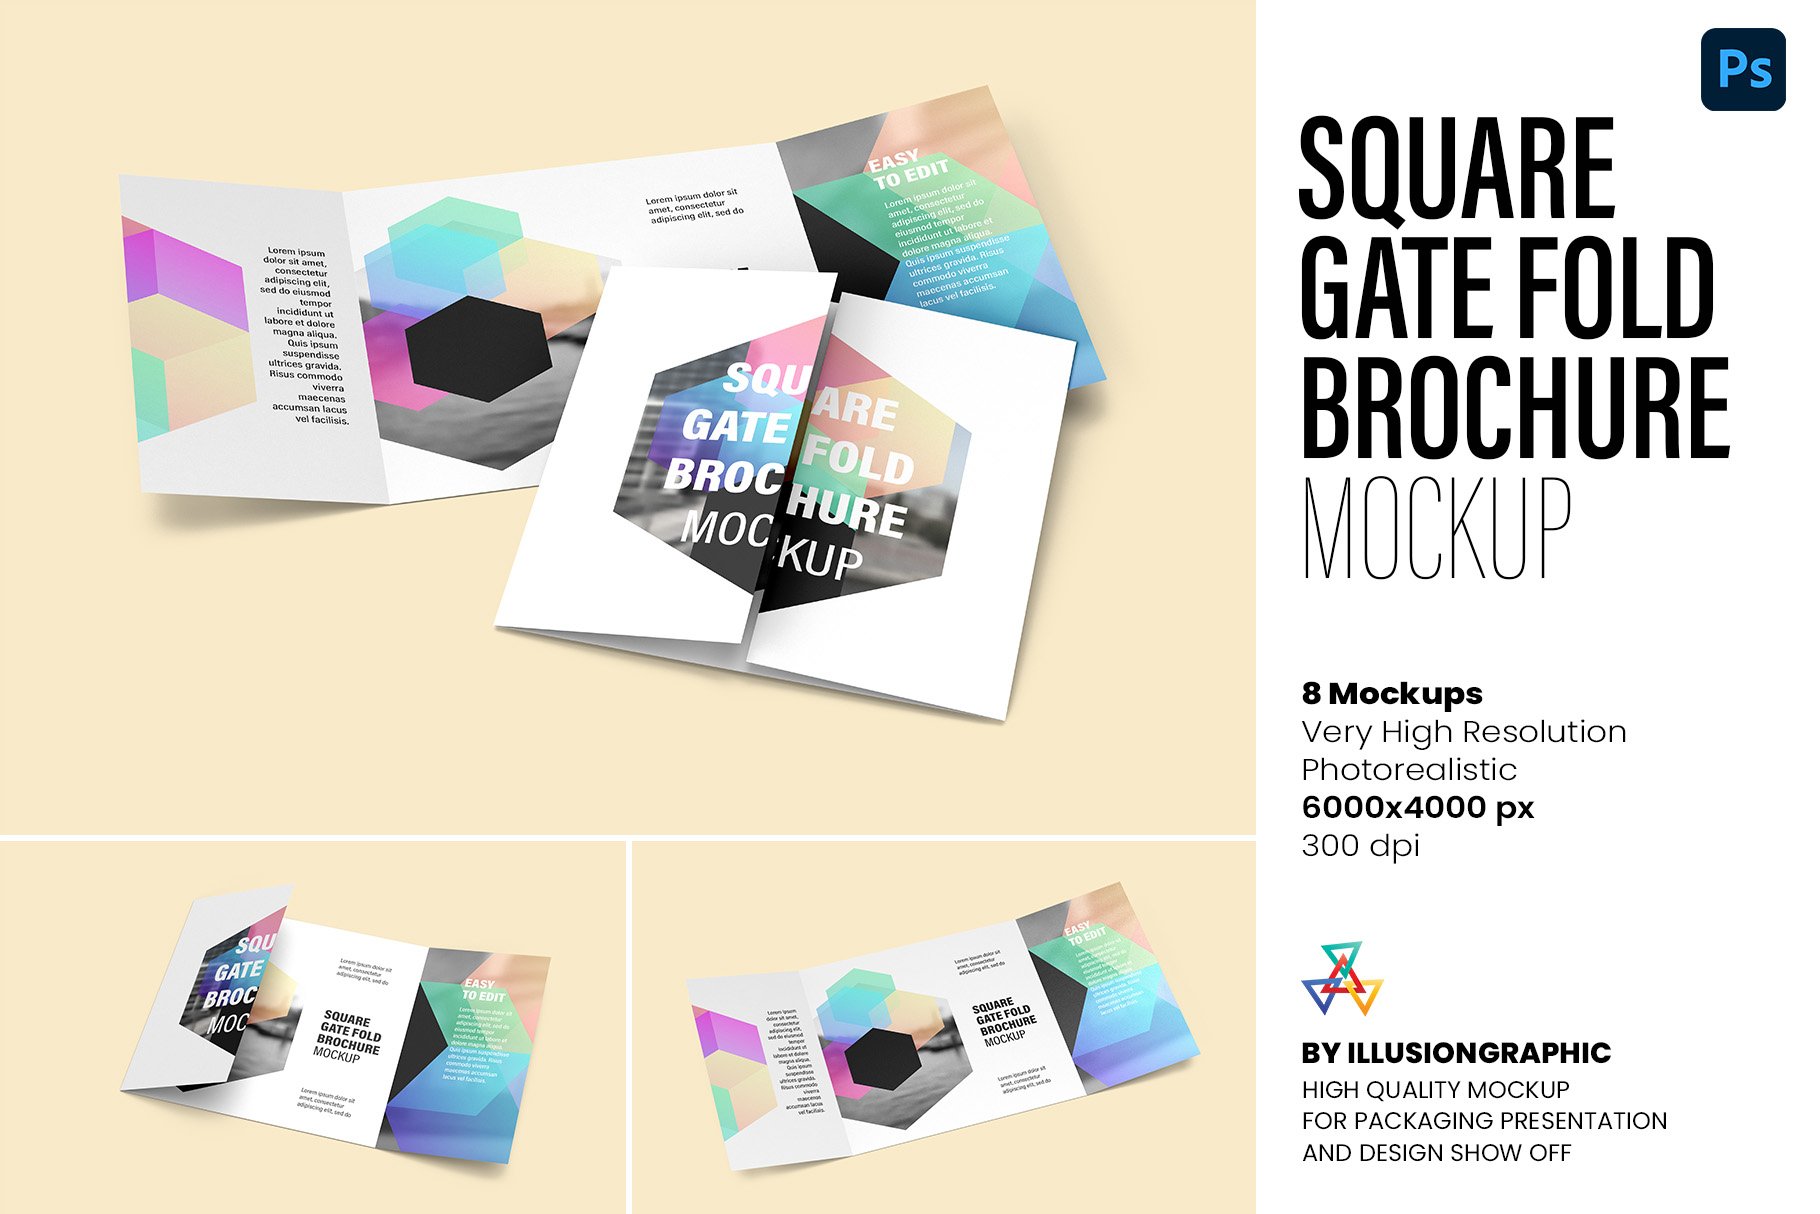 Square Gate Fold Brochure Mockup cover image.